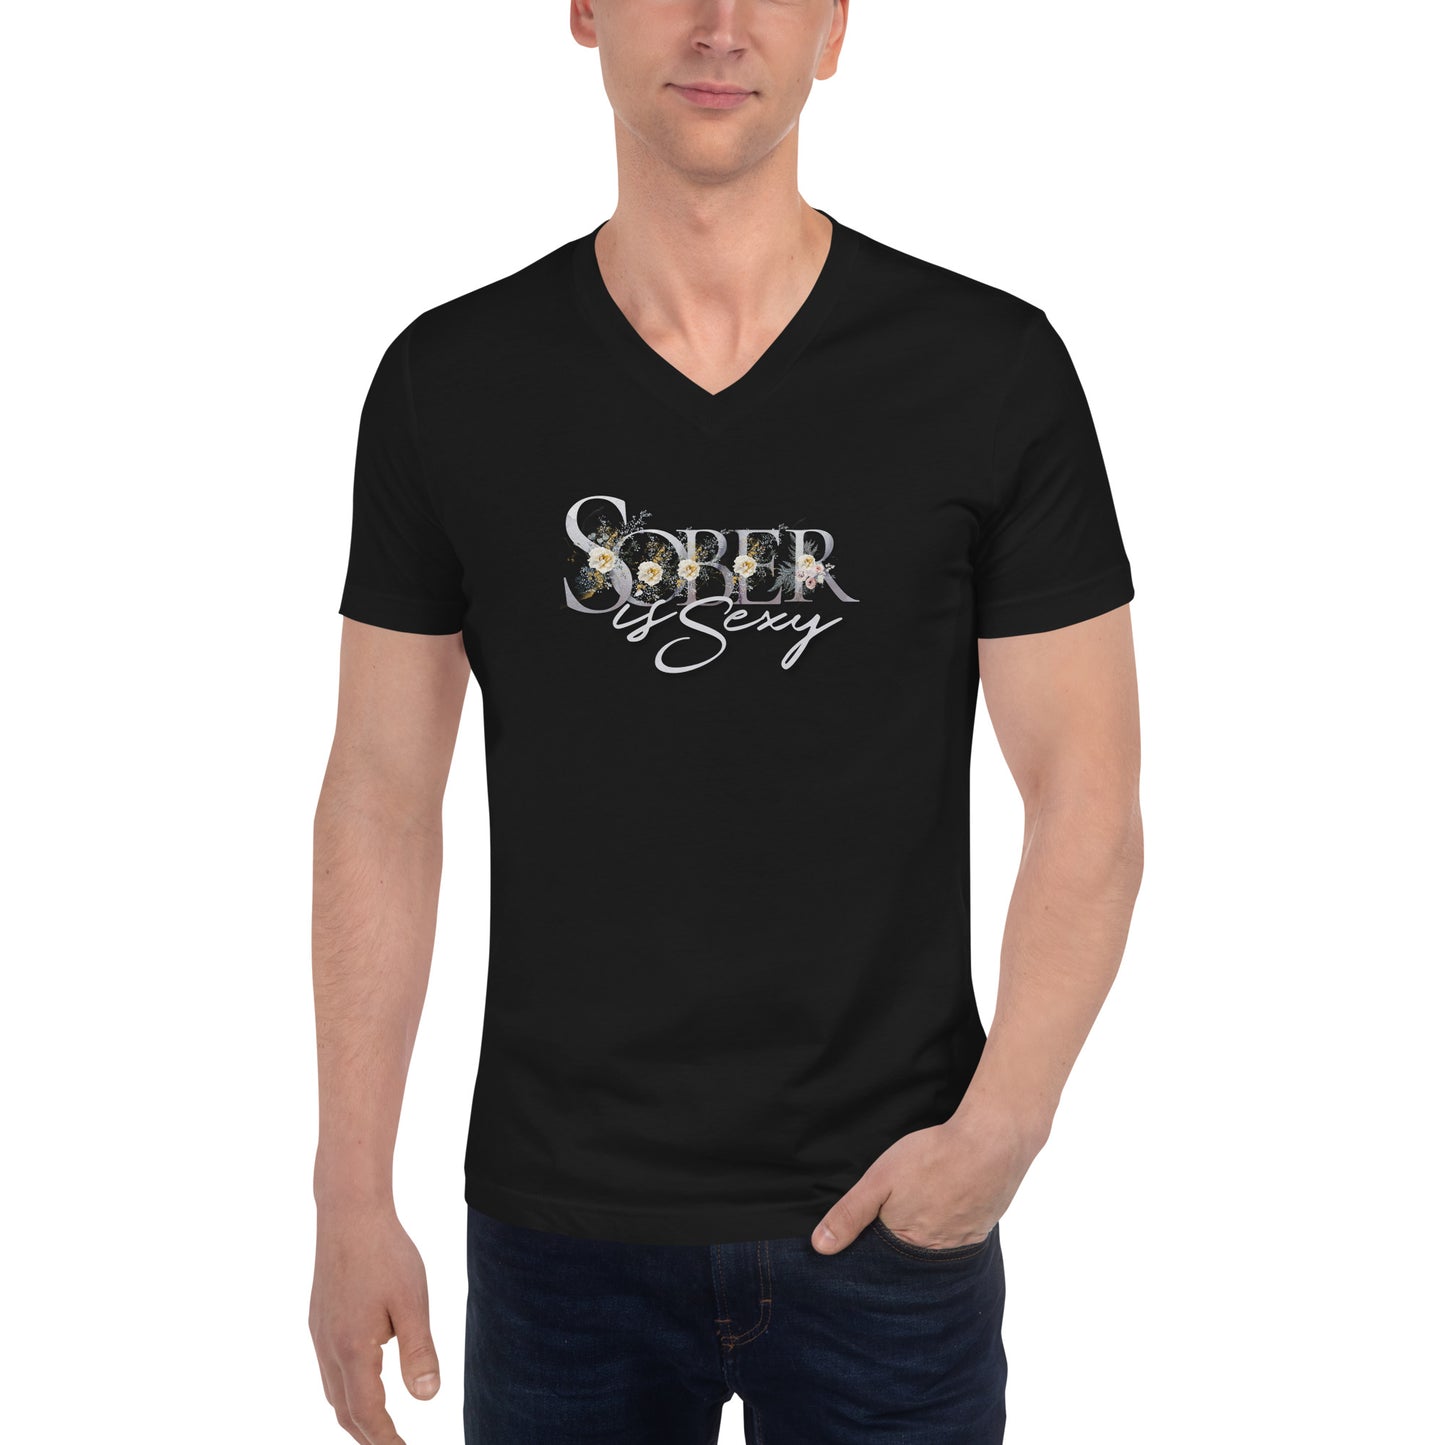 Sober is Sexy - Unisex Short Sleeve V-Neck T-Shirt